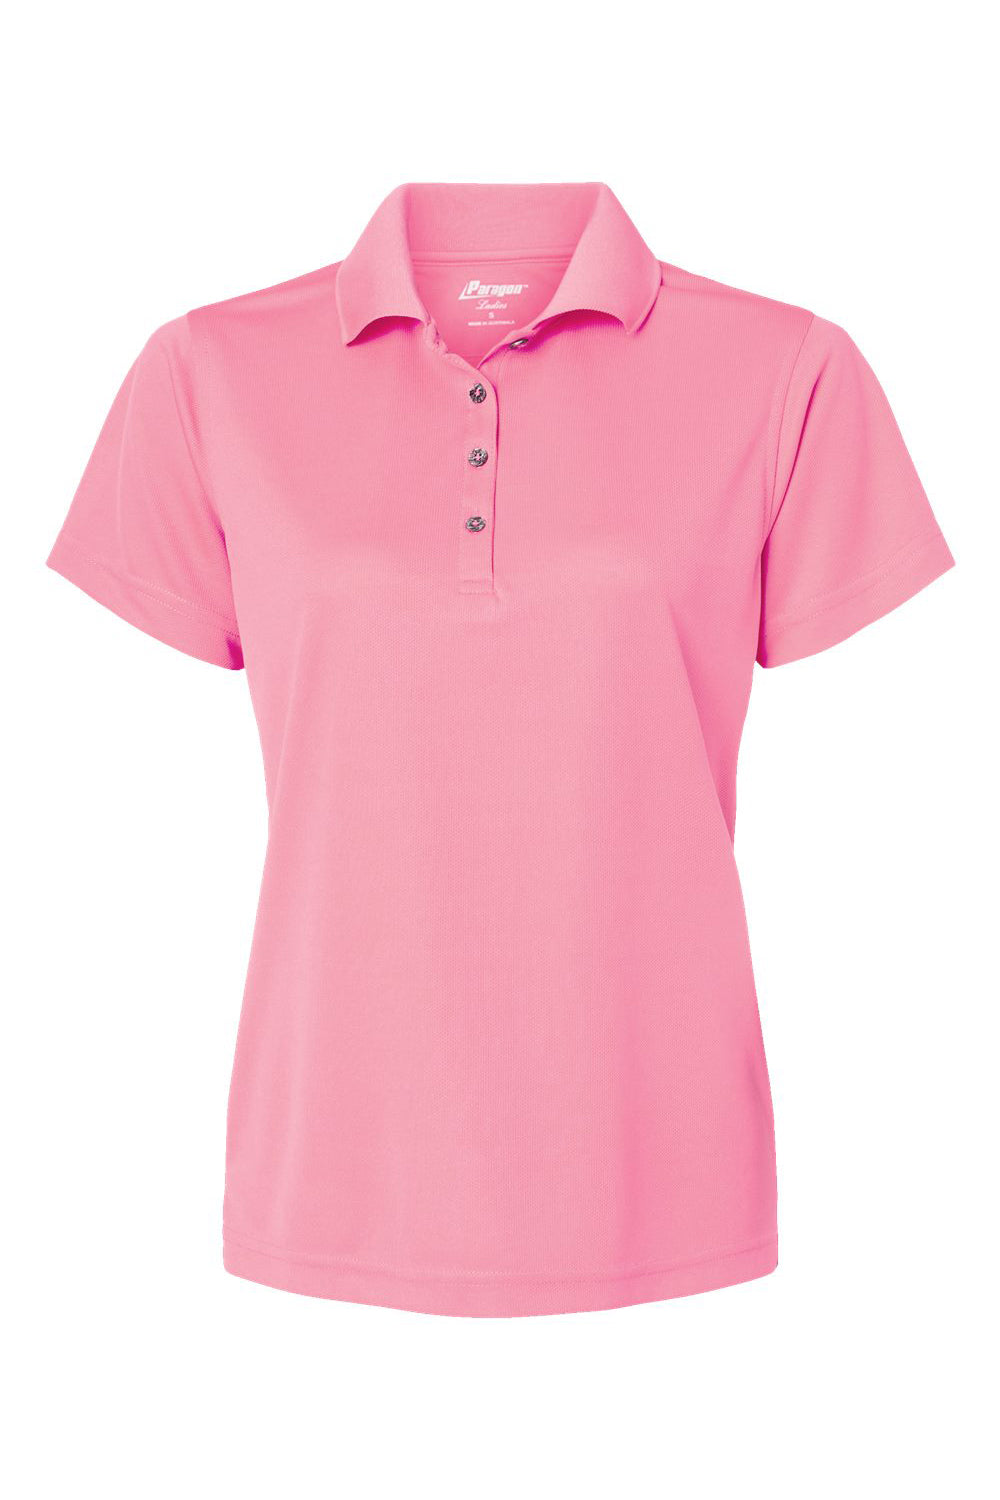 Paragon 104 Womens Saratoga Performance Mini Mesh Short Sleeve Polo Shirt Charity Pink Flat Front